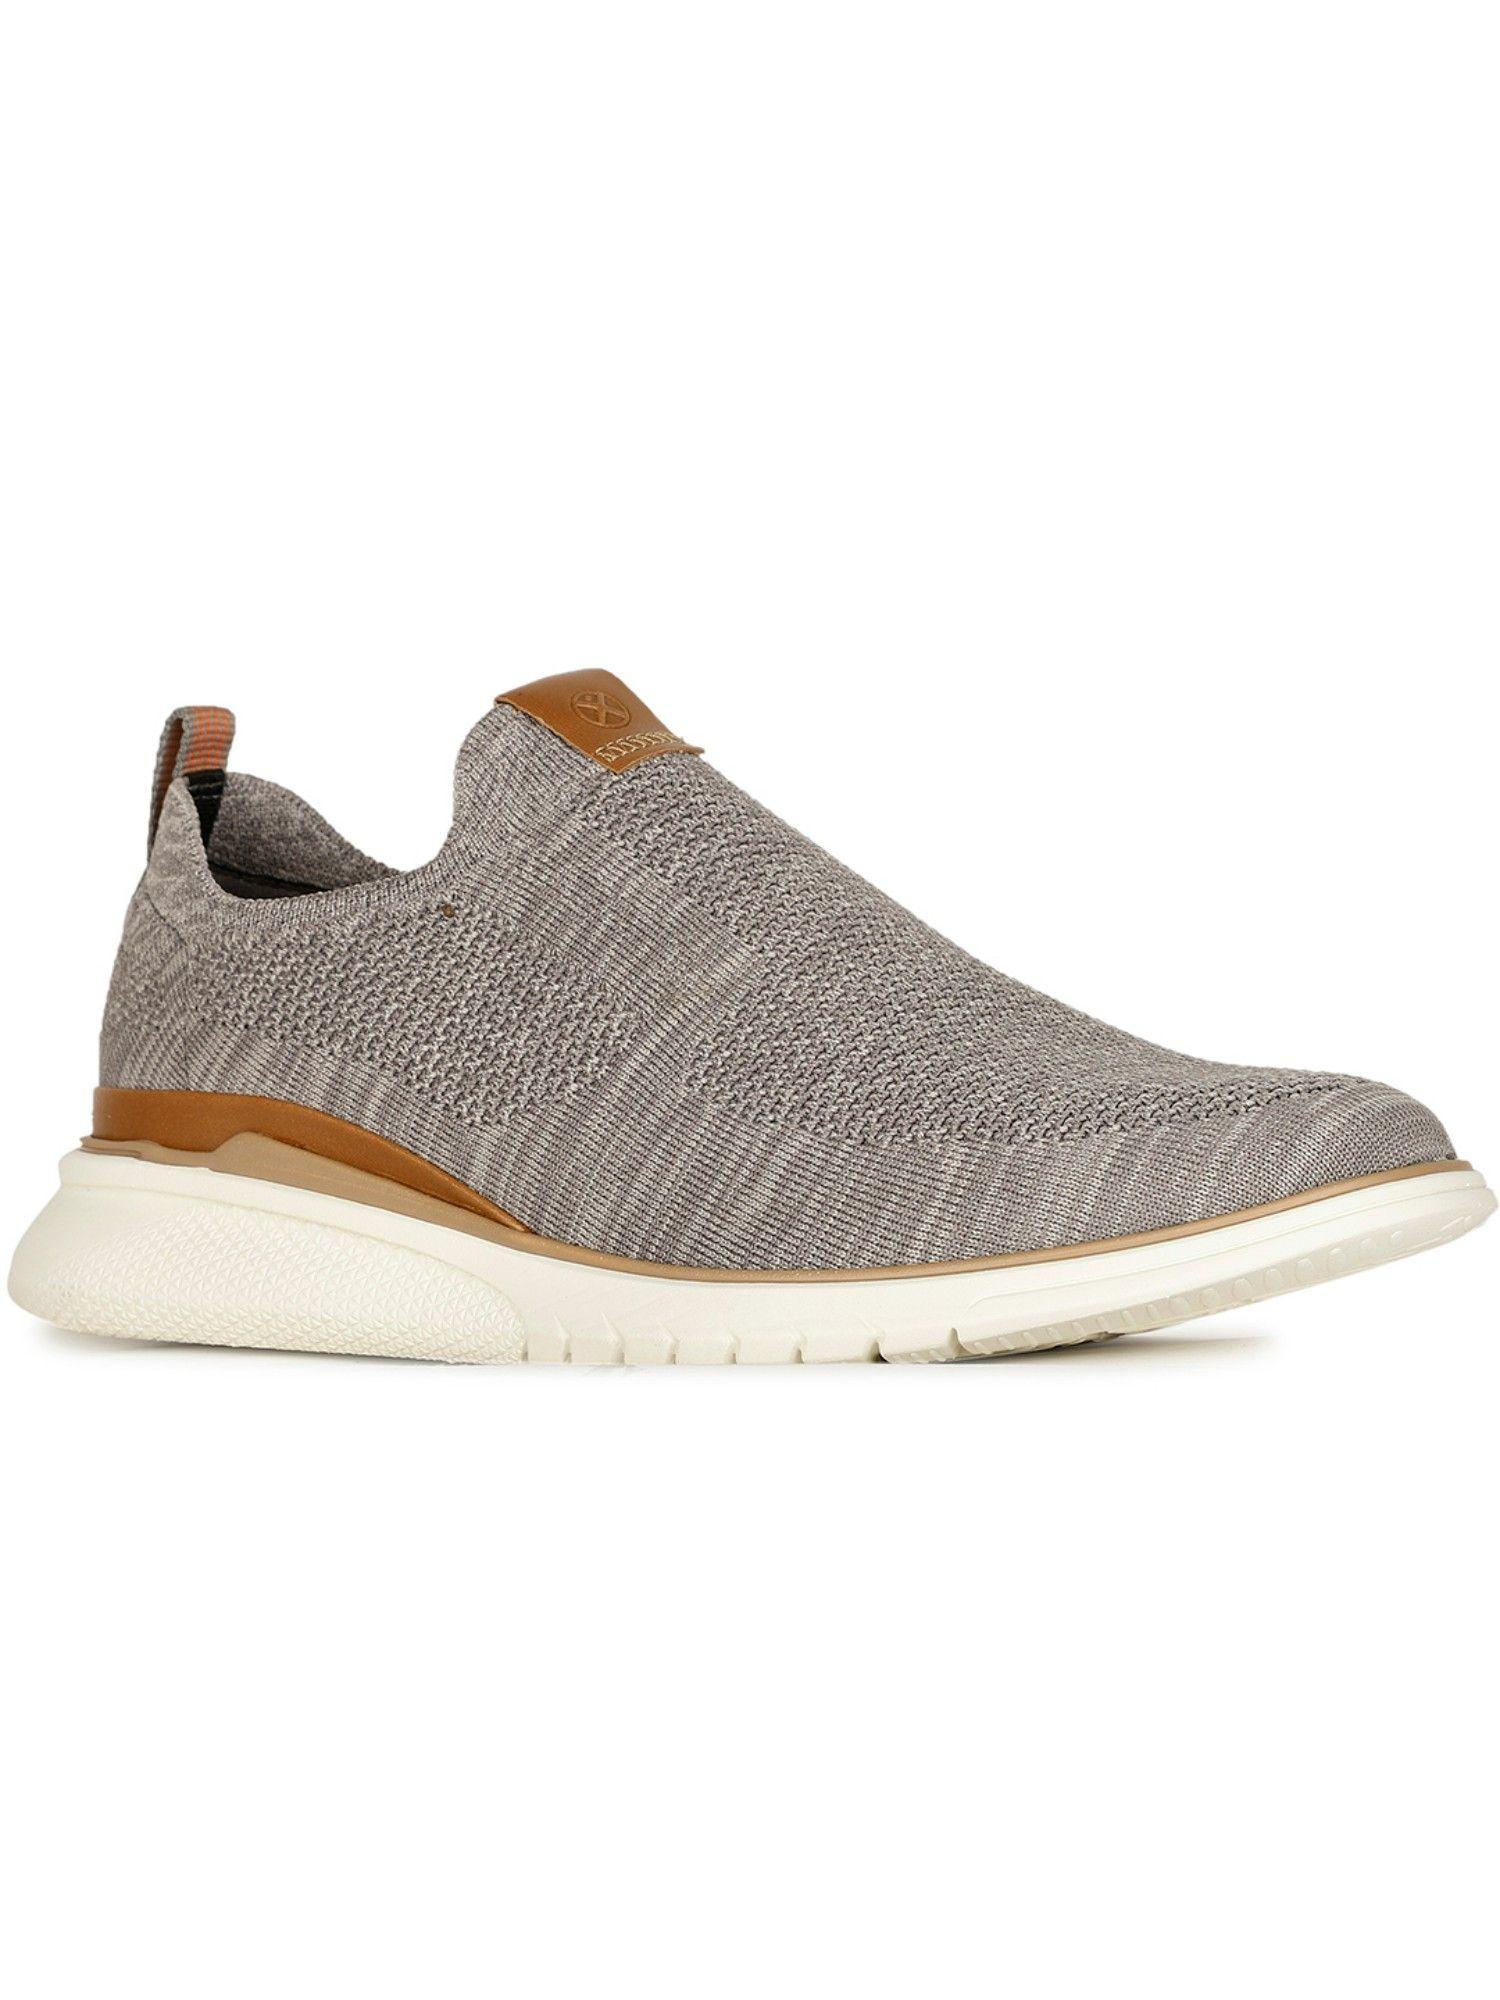 advance knit sneakers for men (grey)